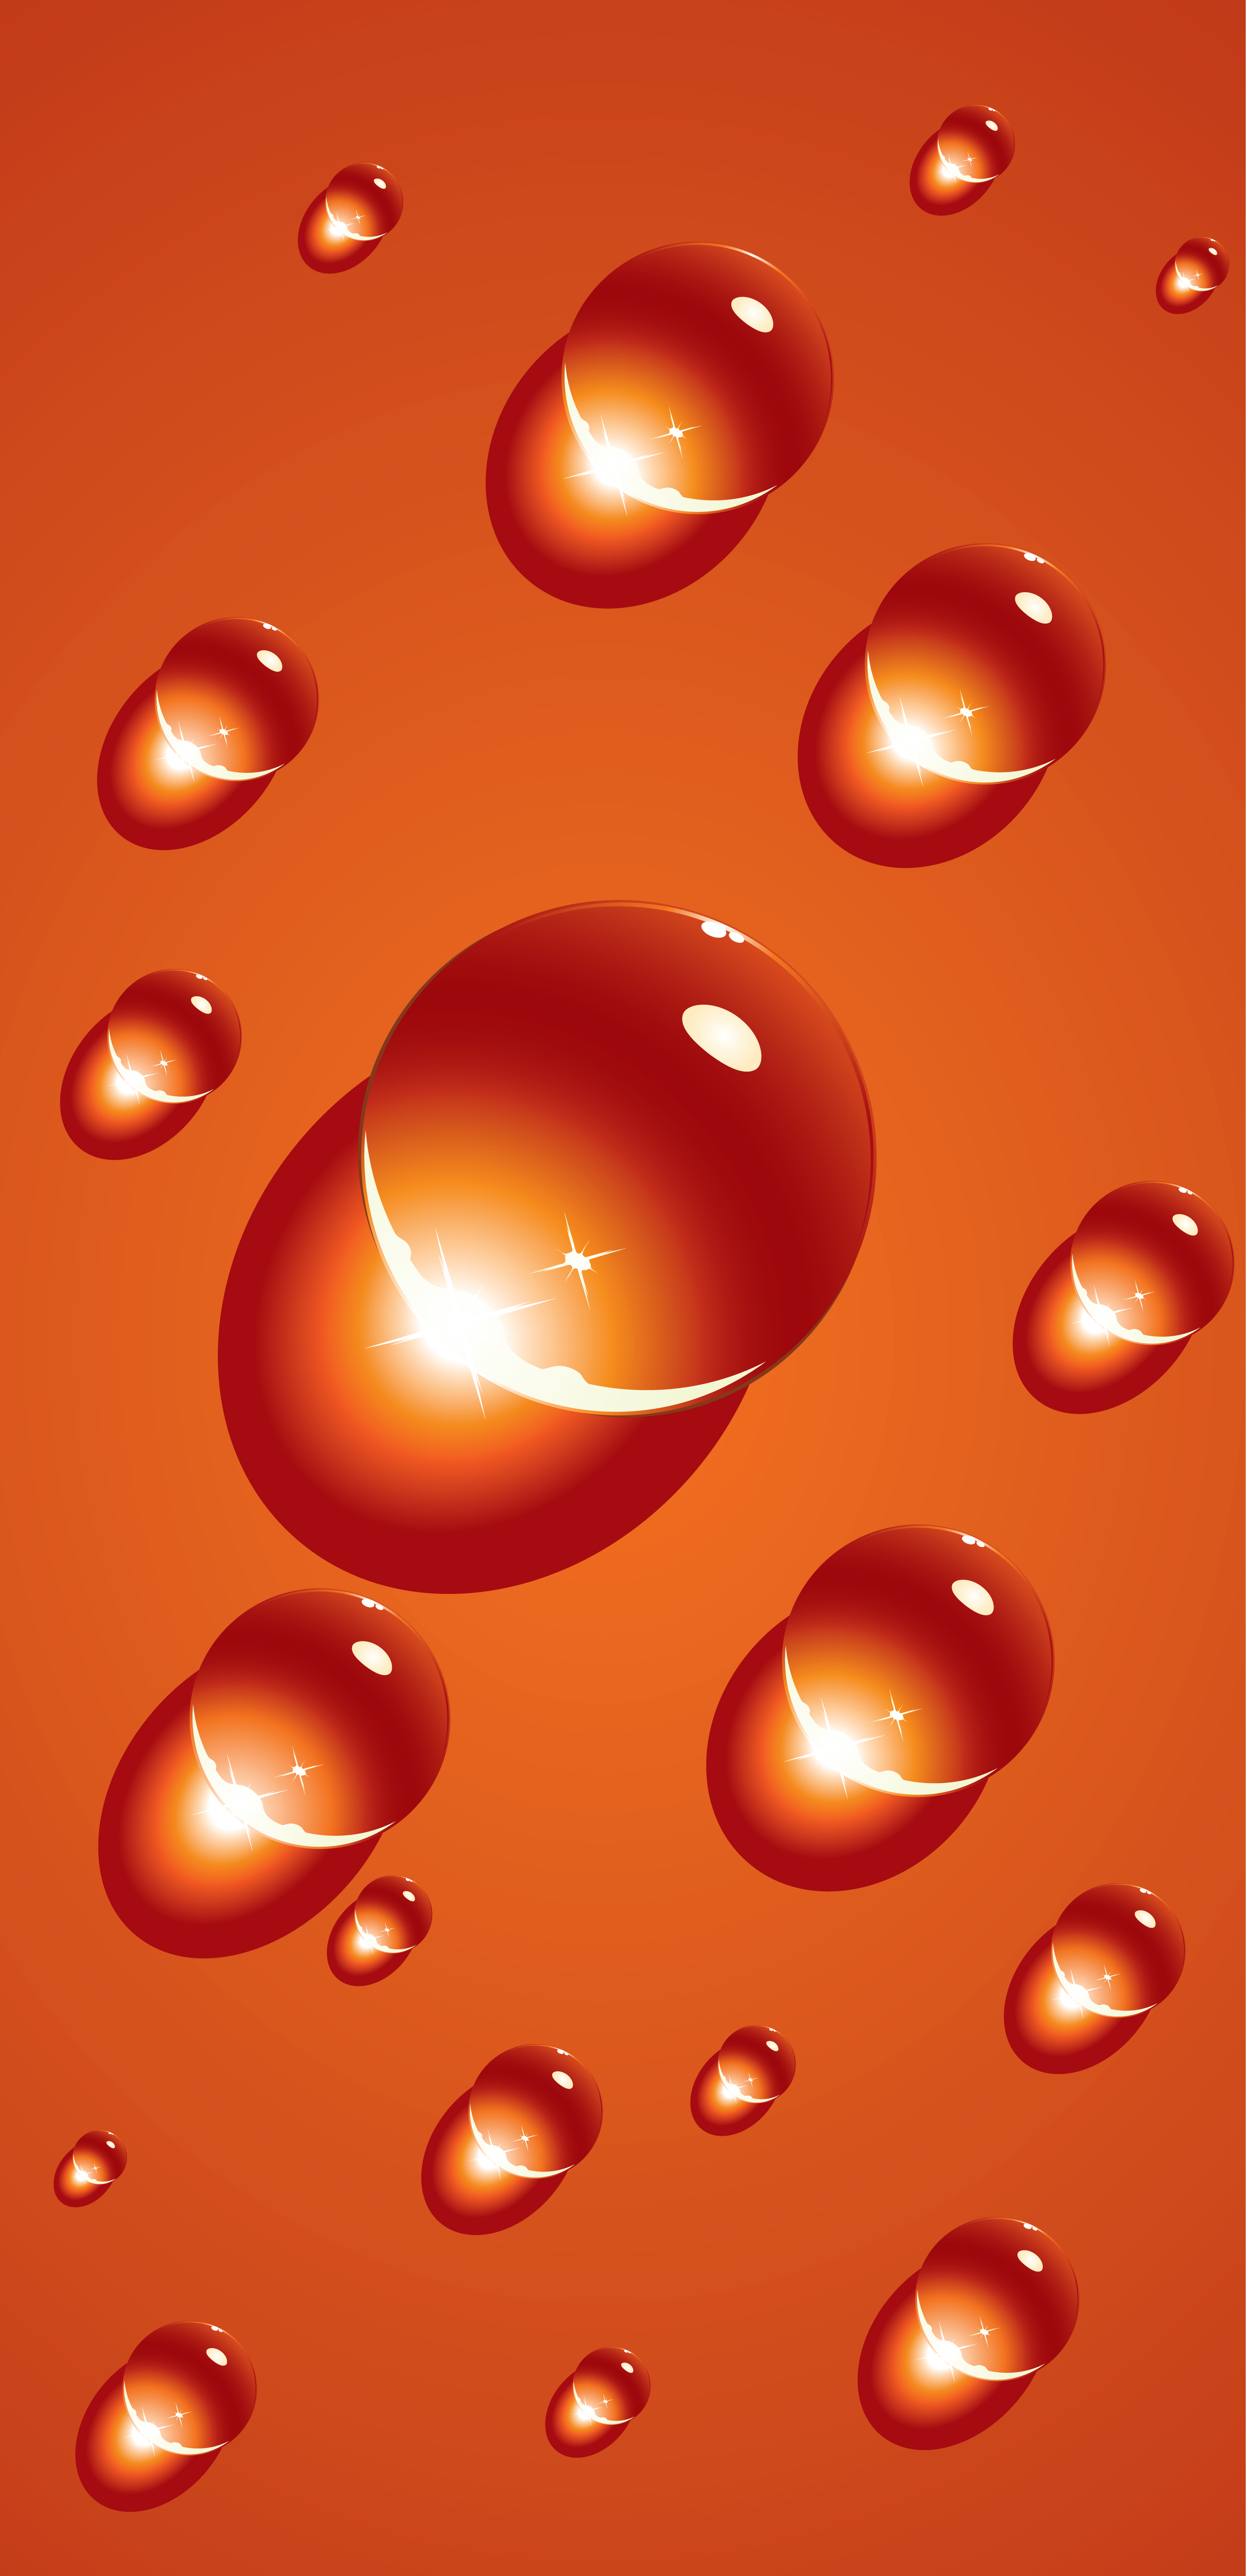 water droplet wallpaper iPhone ongliong11 idownloadblog orange